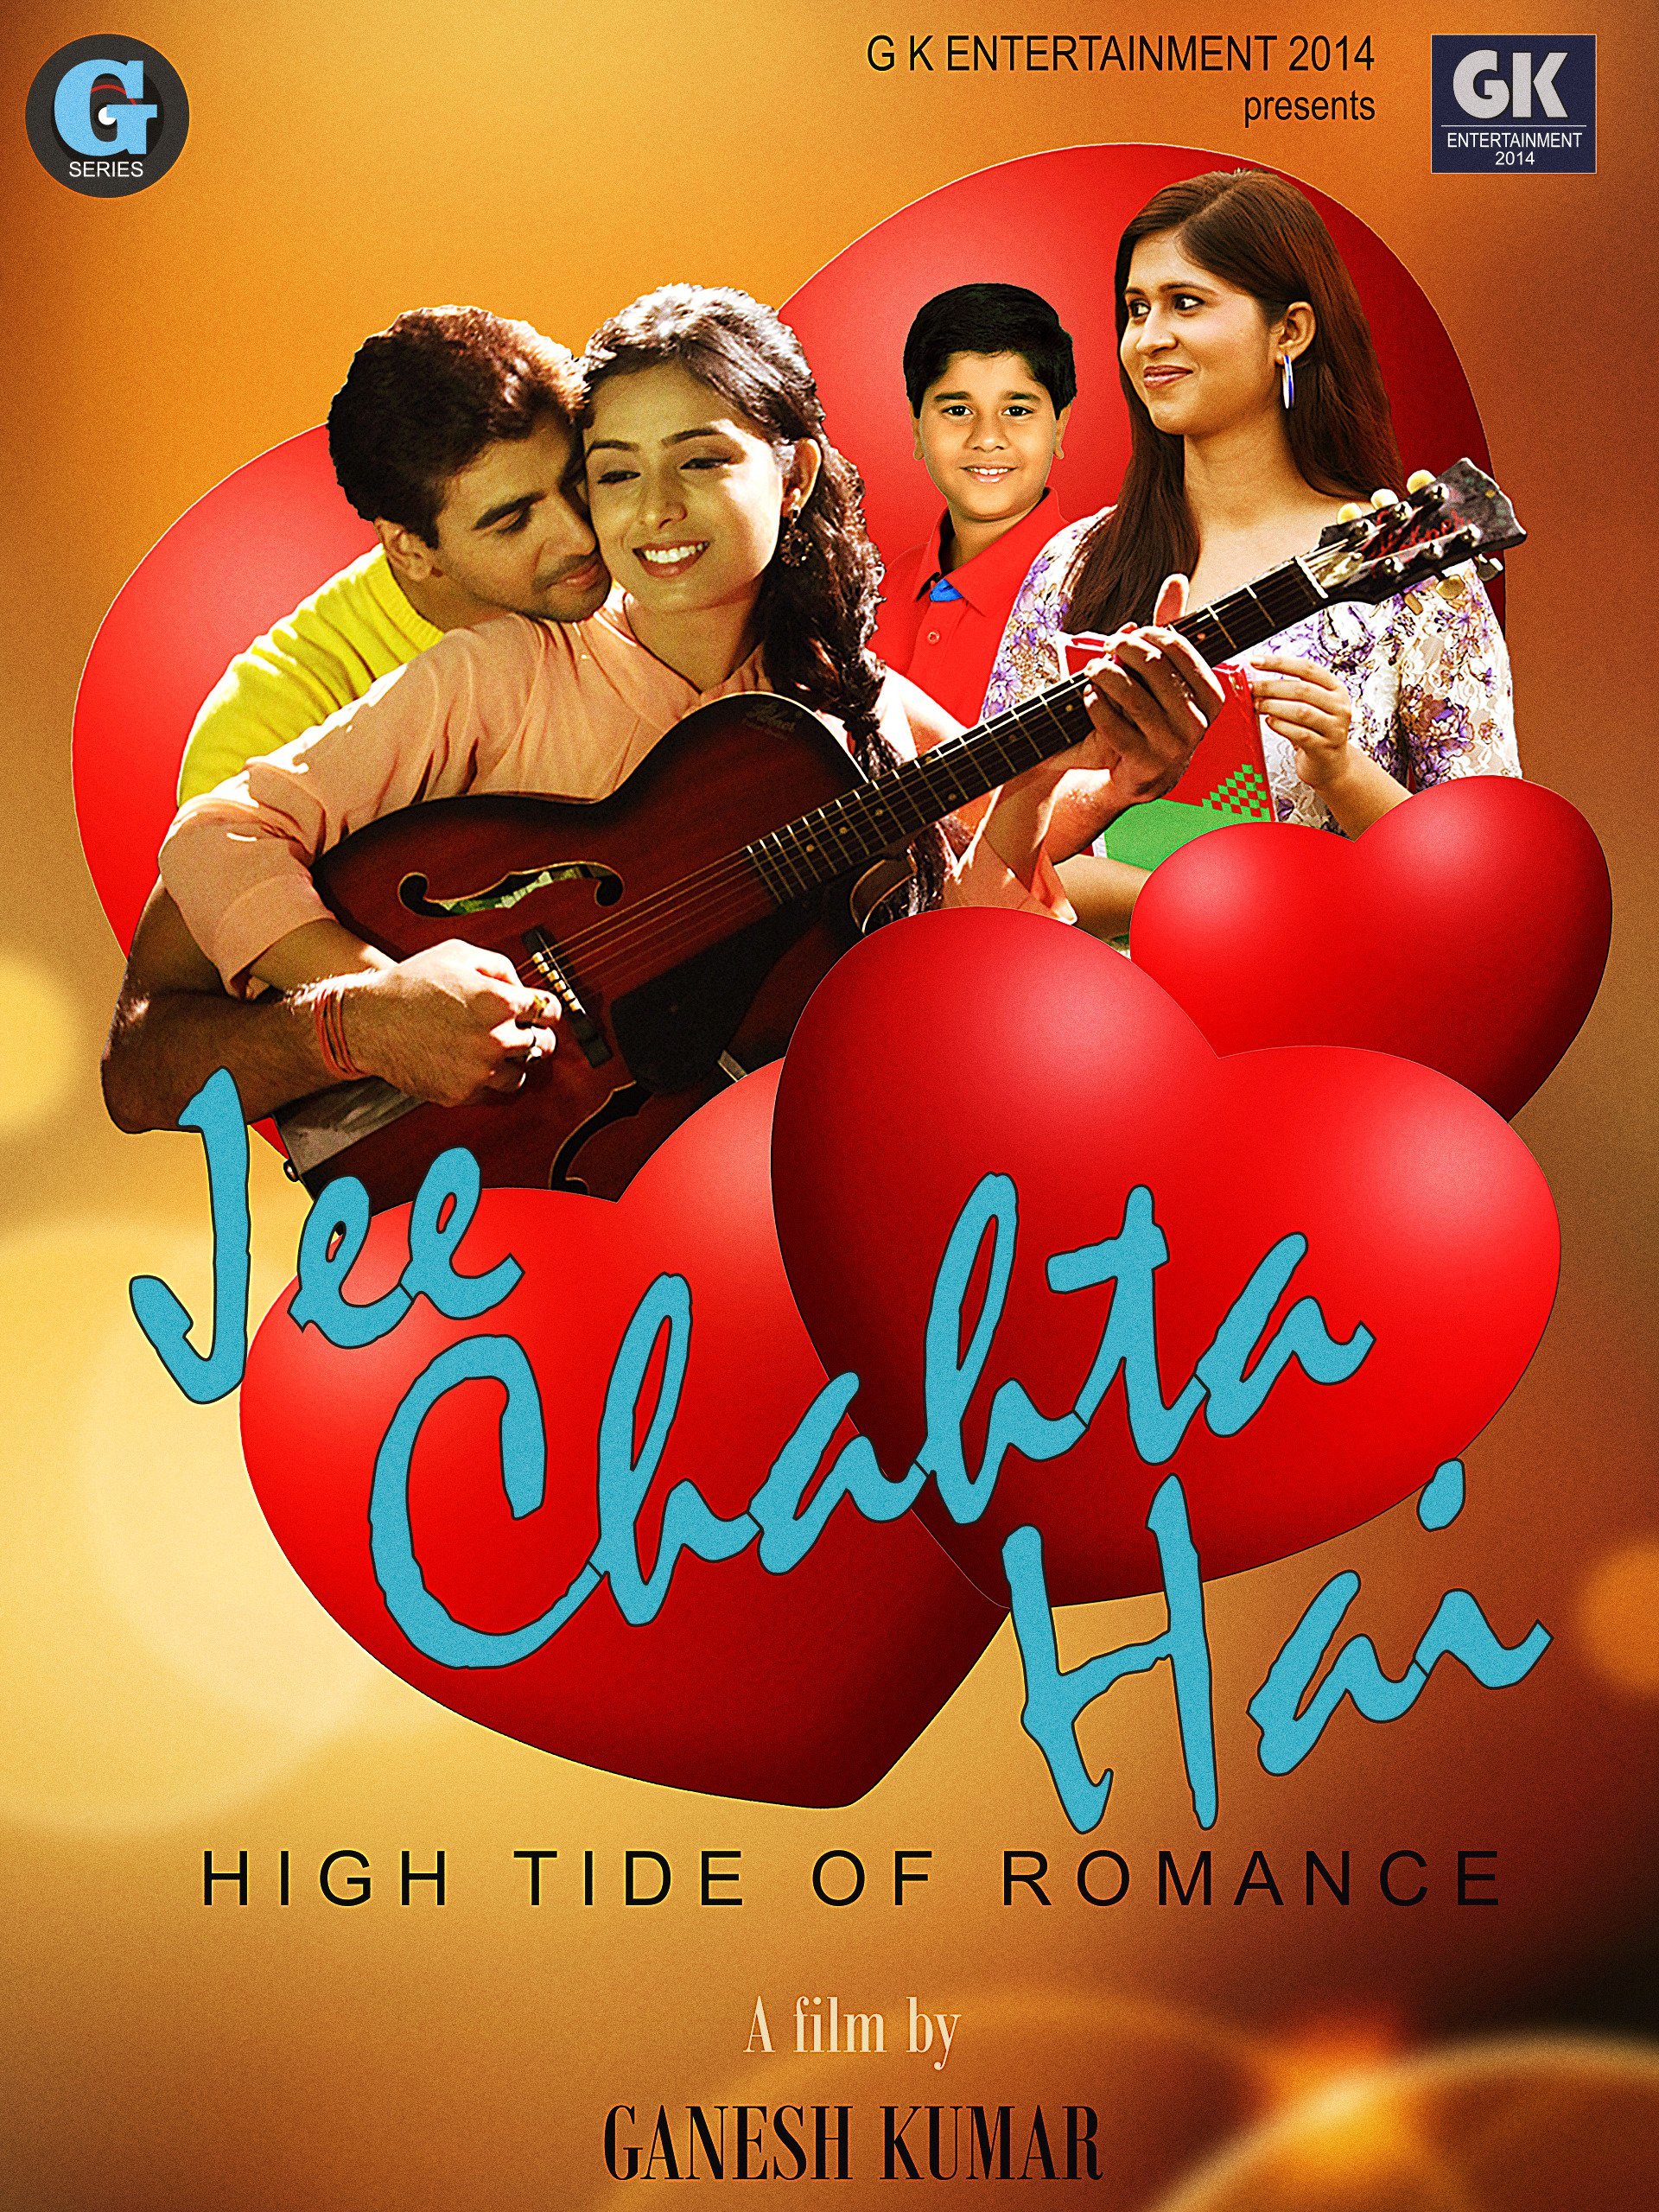 Jee Chahta Hai High Tide Of Romance 2015 Hindi Movie 1080p HDRip 2.5GB Download